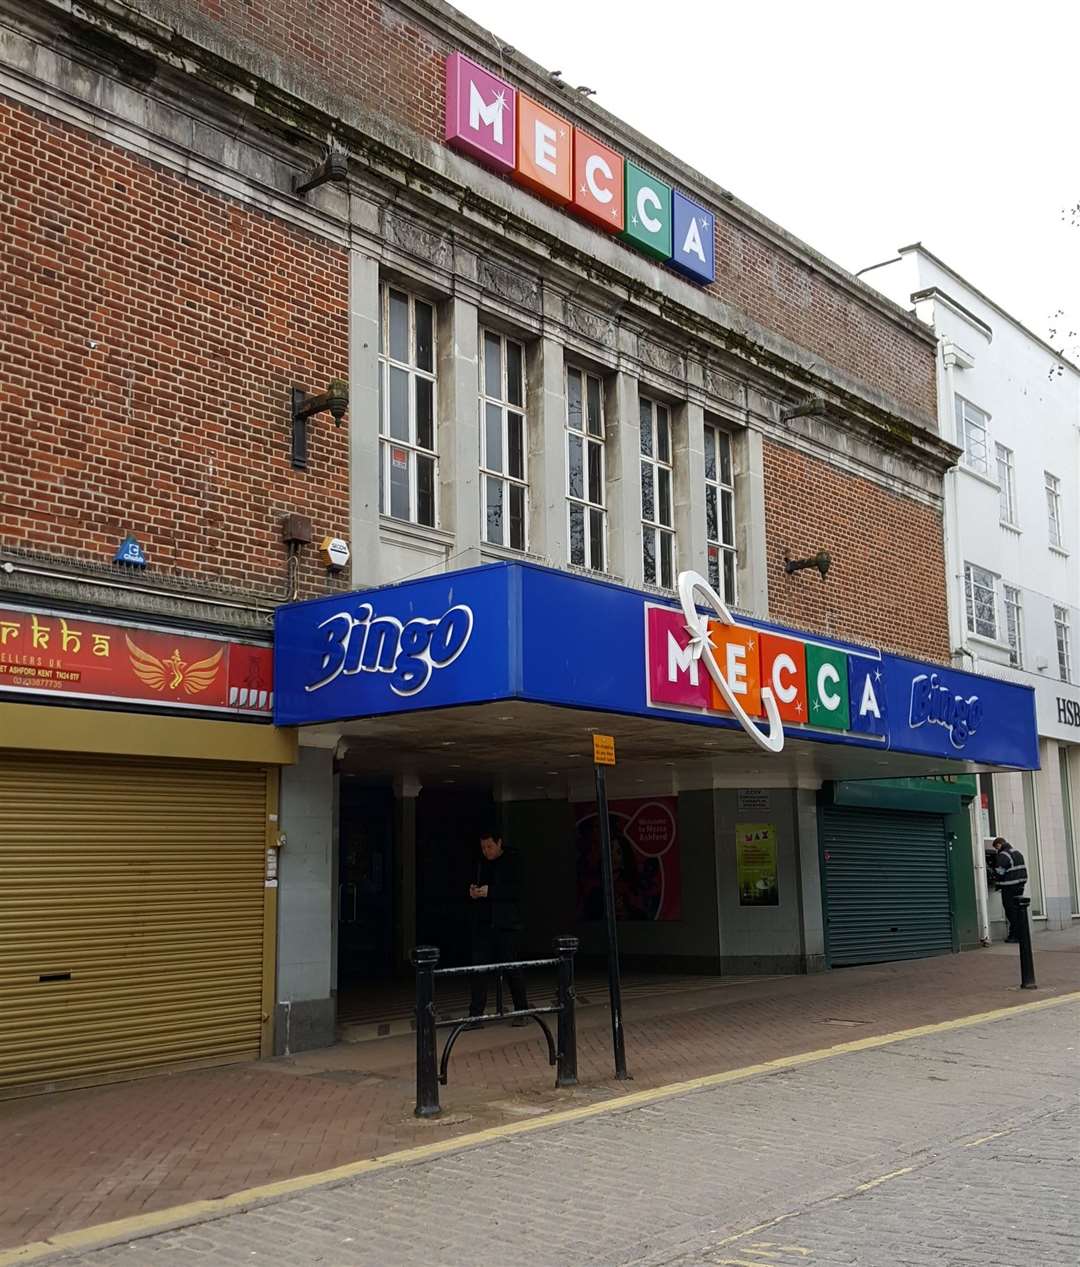 The former Mecca Bingo hall in Ashford